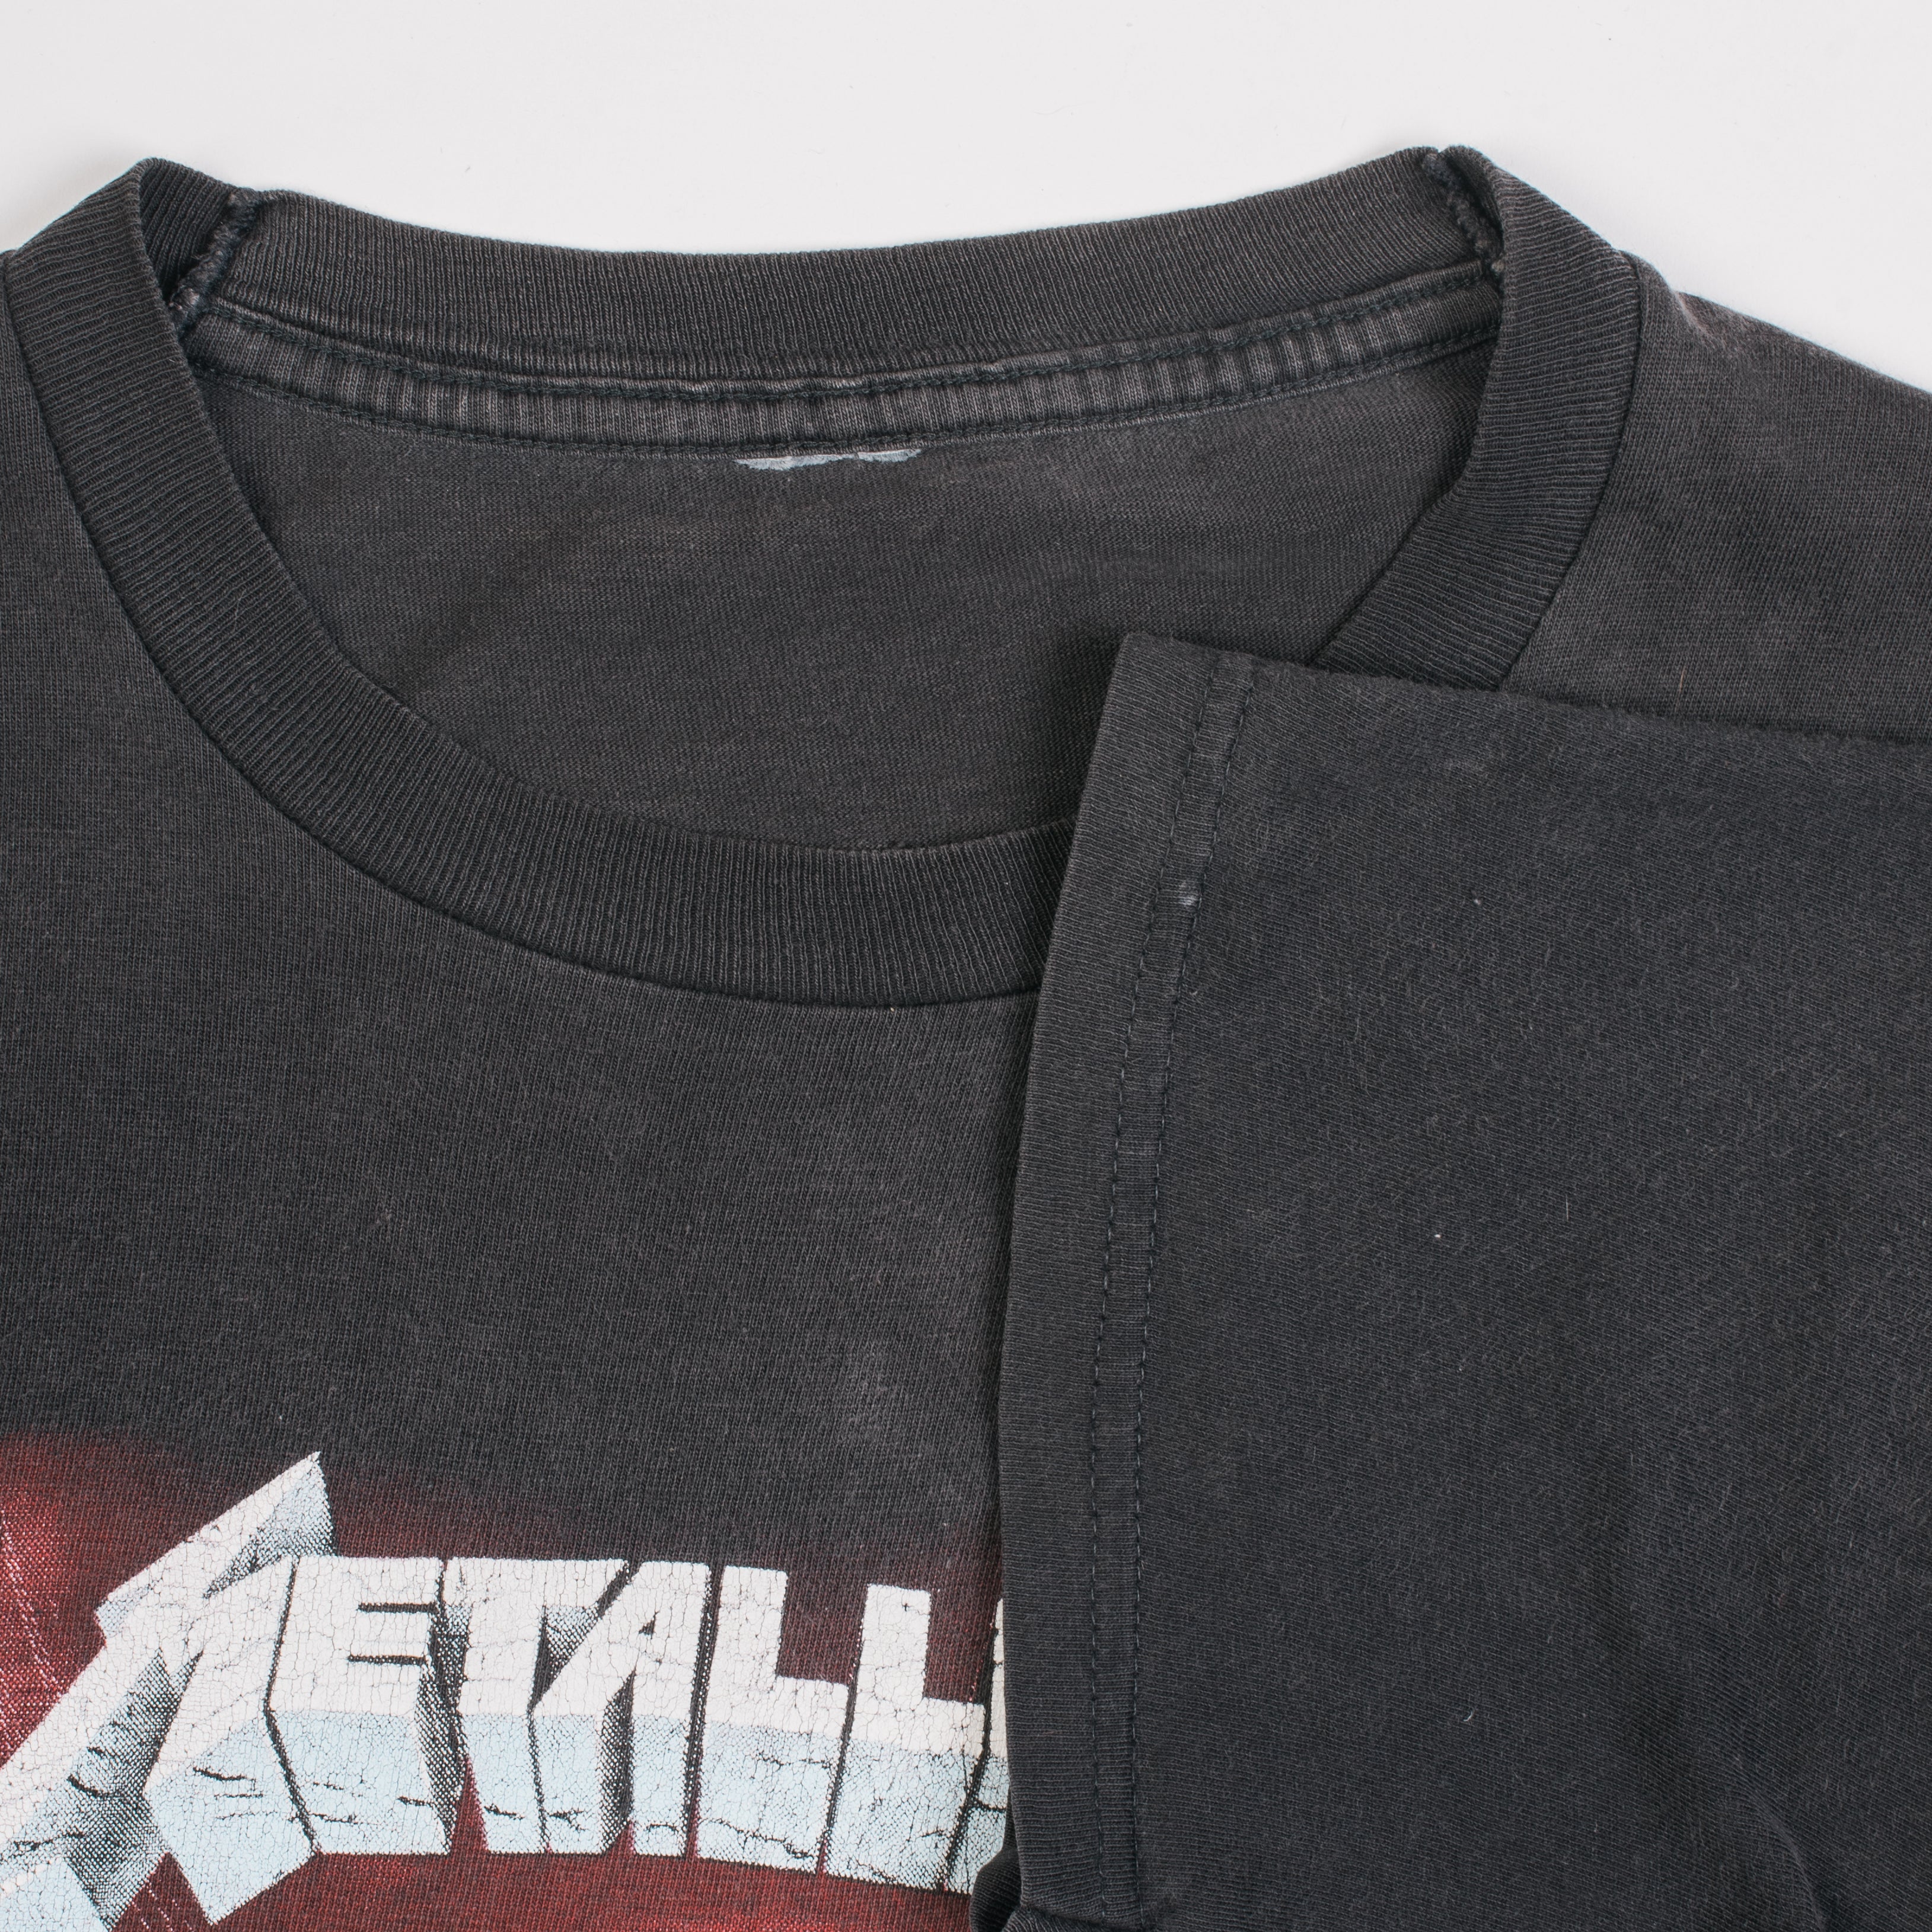 Vintage 80’s Metallica Damage Inc European Tour T-Shirt